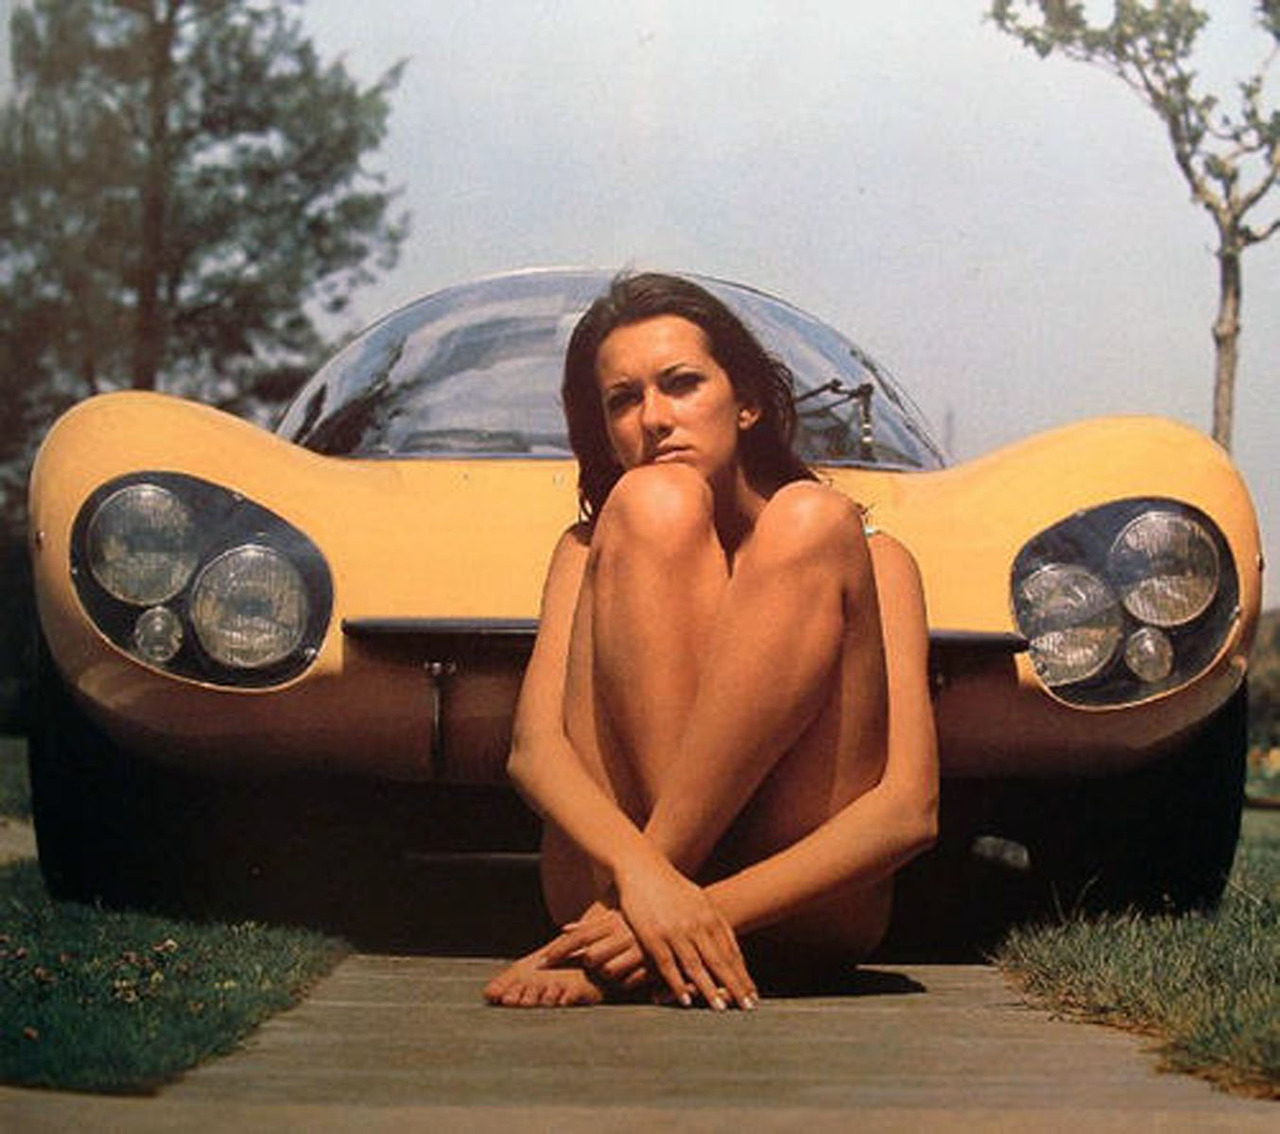 girlsandmachines:
Ferrari Dino 206 Competizione, 1967, by Pininfarina.
